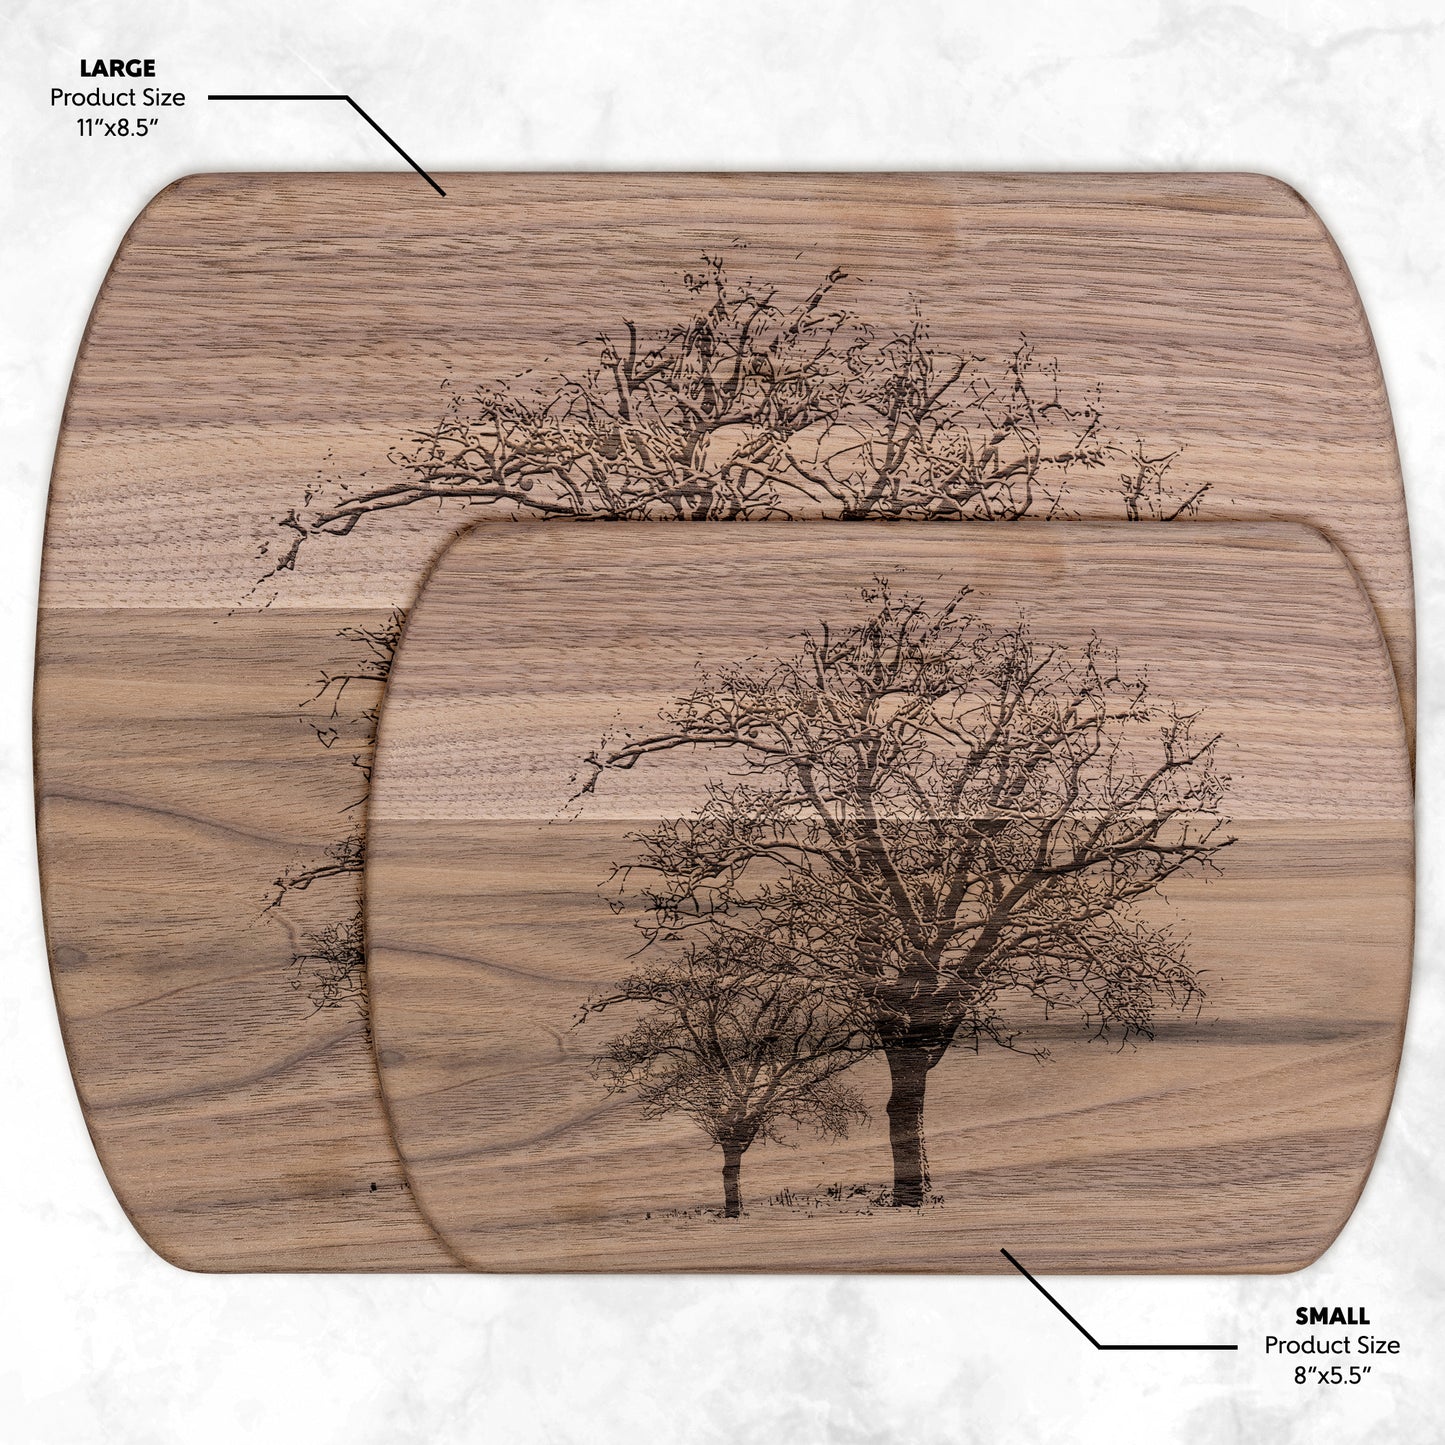 Walnut Cutting Board, Maple Cutting Board, Oval Cutting Board with Bare Trees, Great Housewarming Gift, Hardwood Farm Boards Made in USA